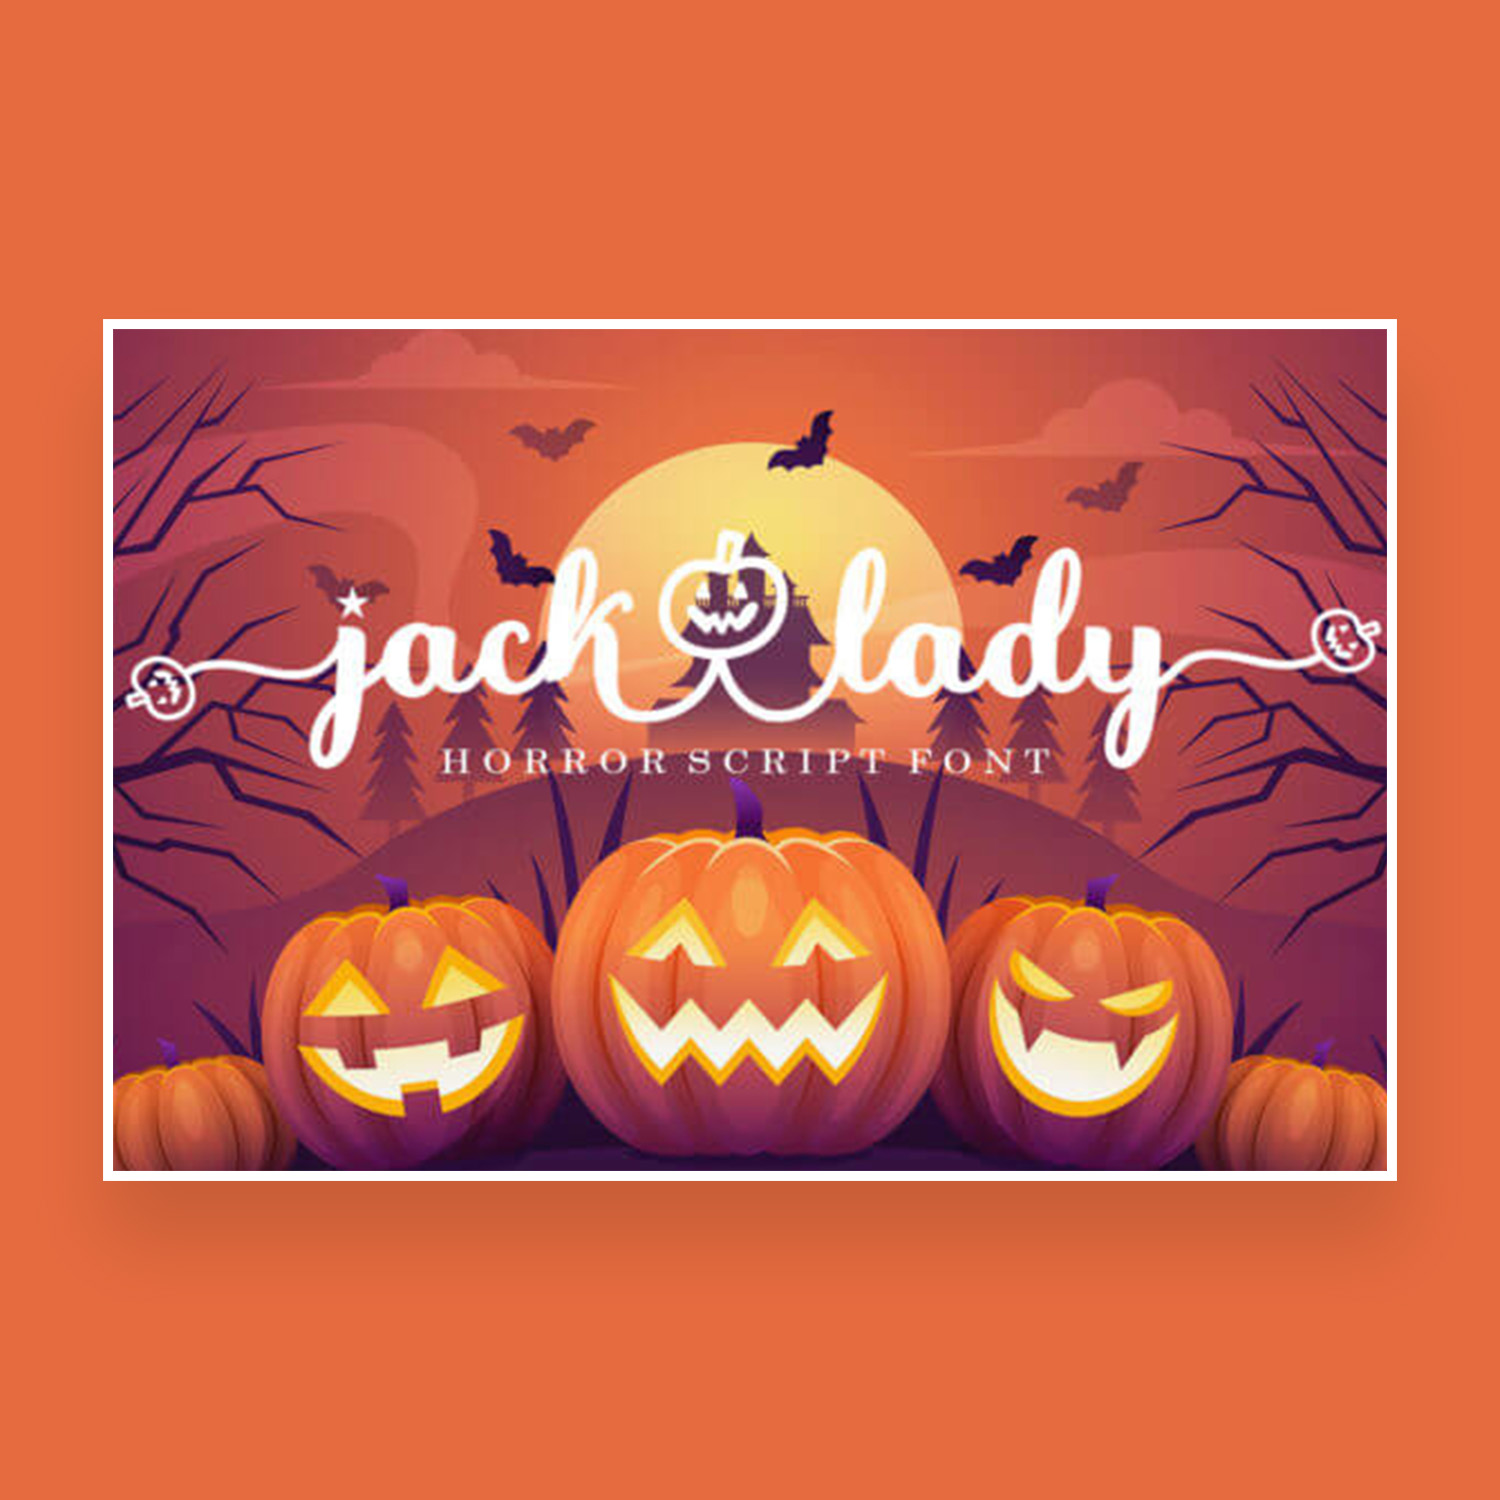 jack lady spooky and cursive script font cover image image.